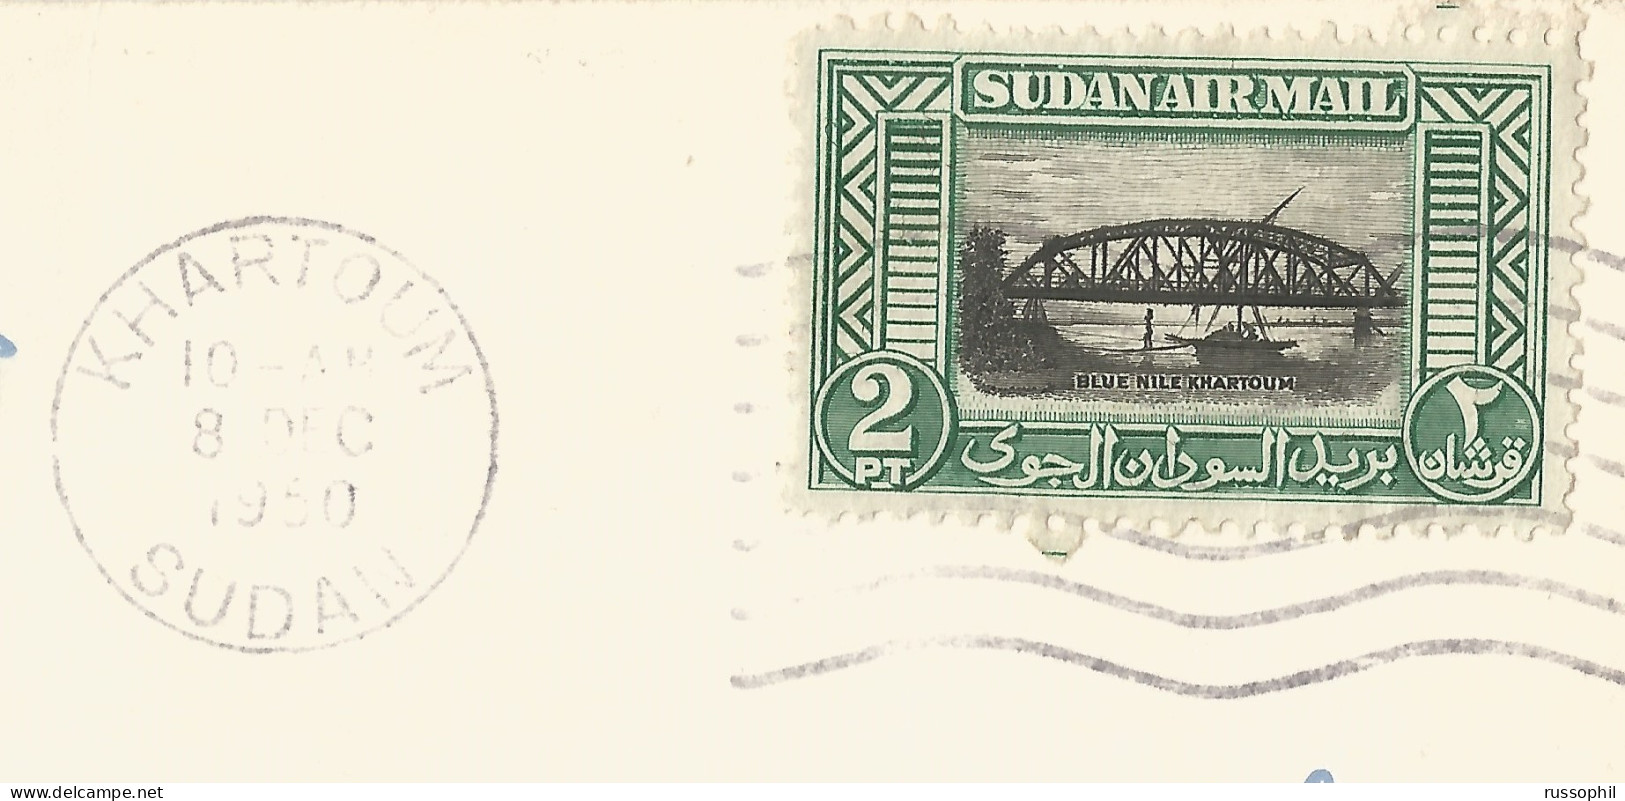 SUDAN - 2 PIA. AIR MAIL FRANKING ON PC (TUT ANKH AMON'S TREASURES) TO BELGIUM - 1950 - Sudan (...-1951)